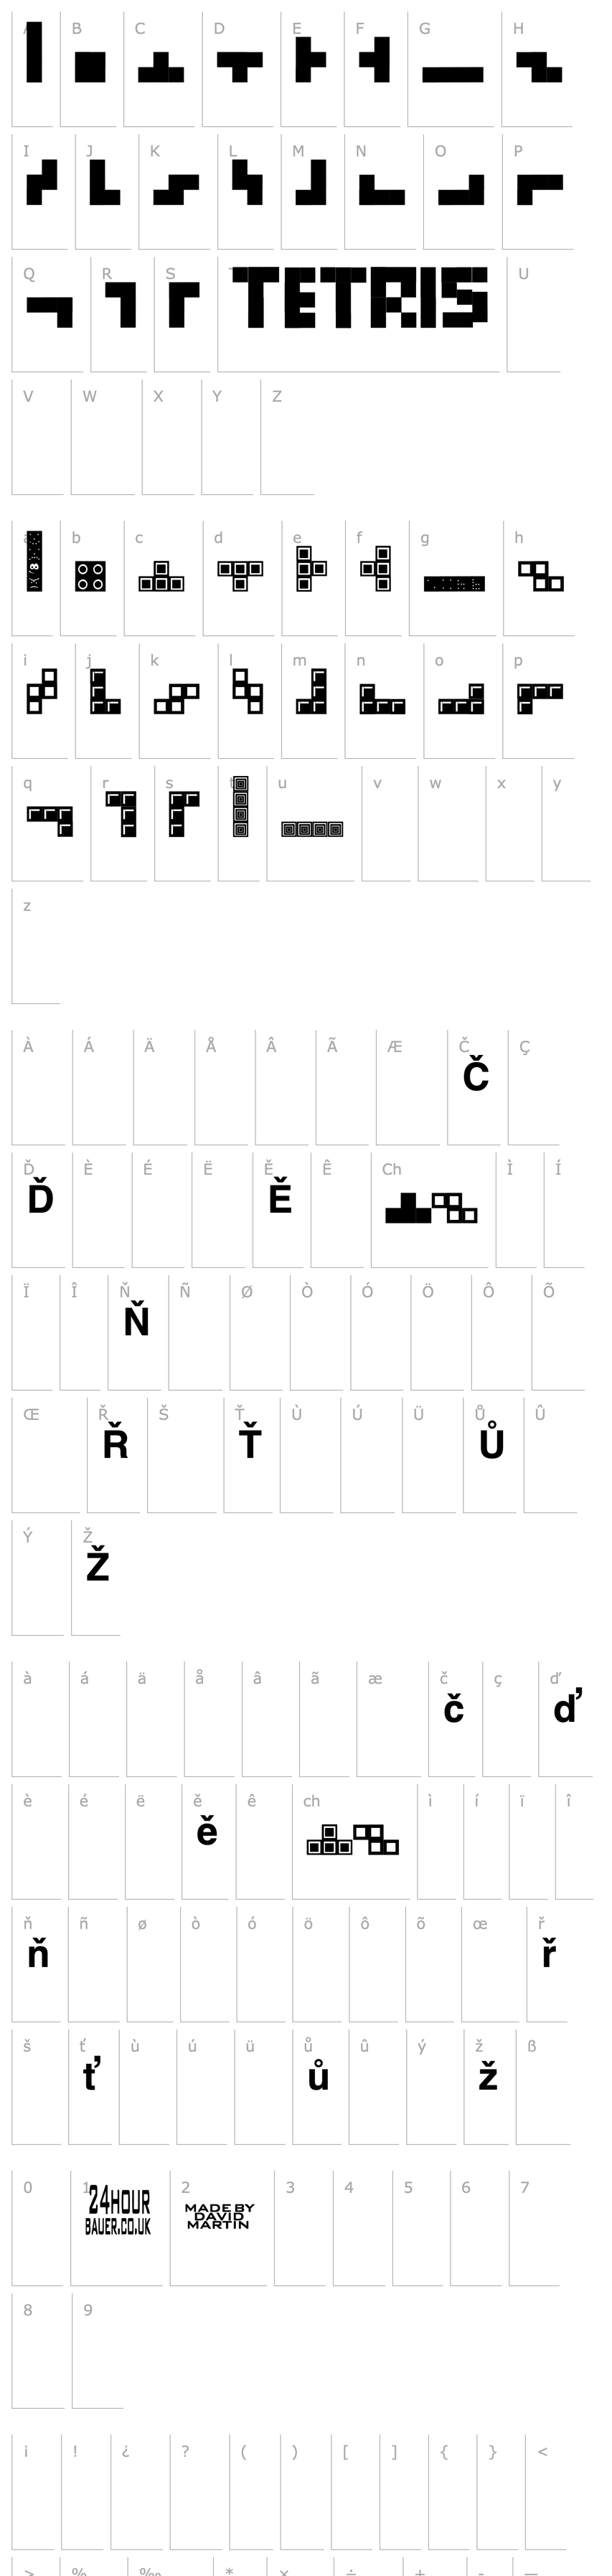 Overview Tetris Blocks